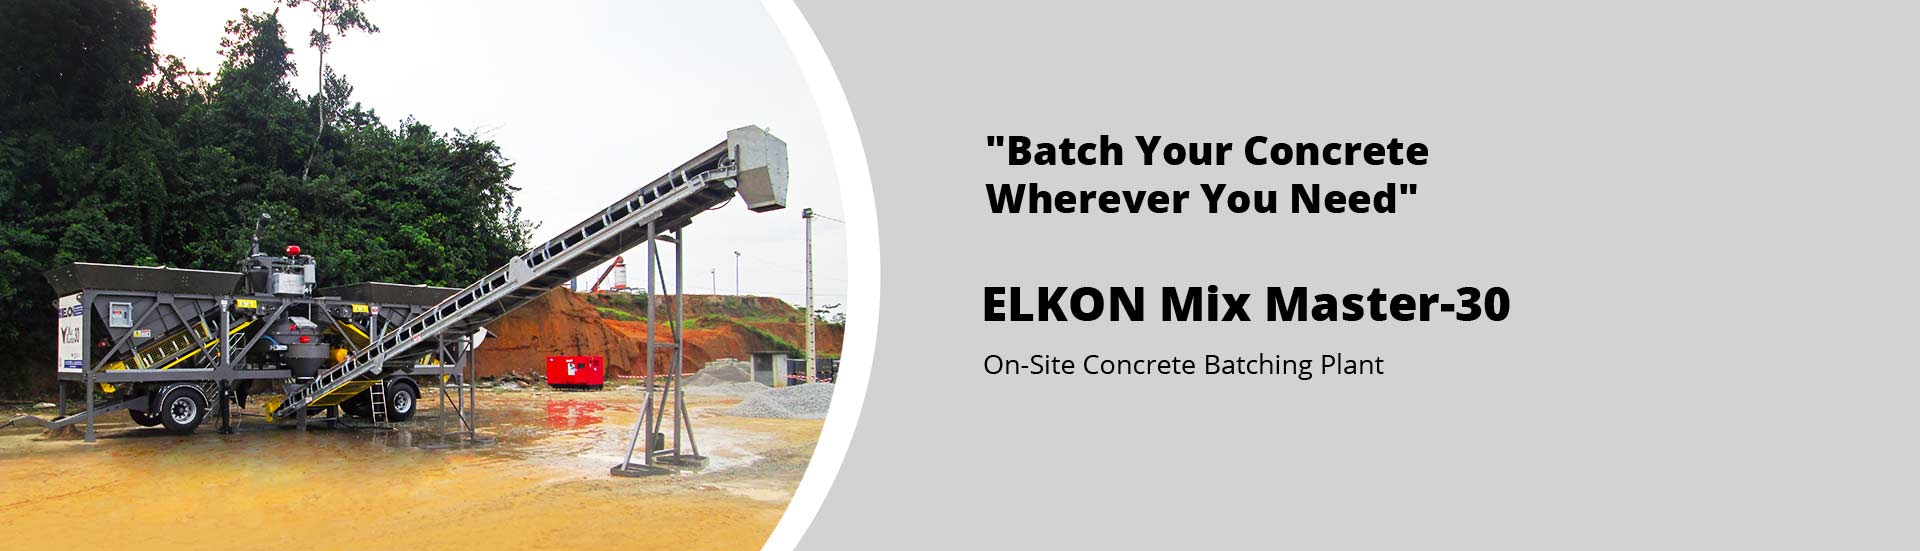 ELKON Mix Master-30 On-Site Concrete Batching Plant